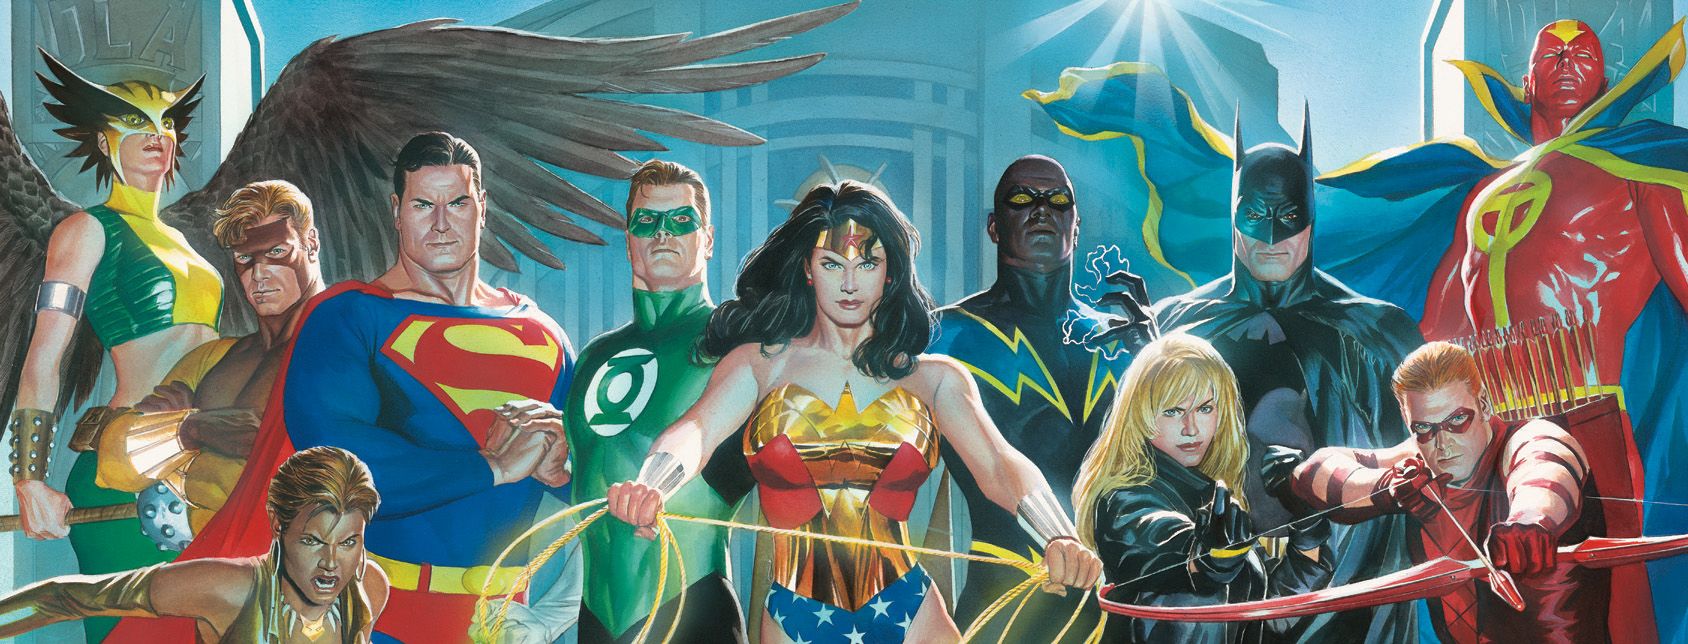 Comics History:Superhero History and Analysis